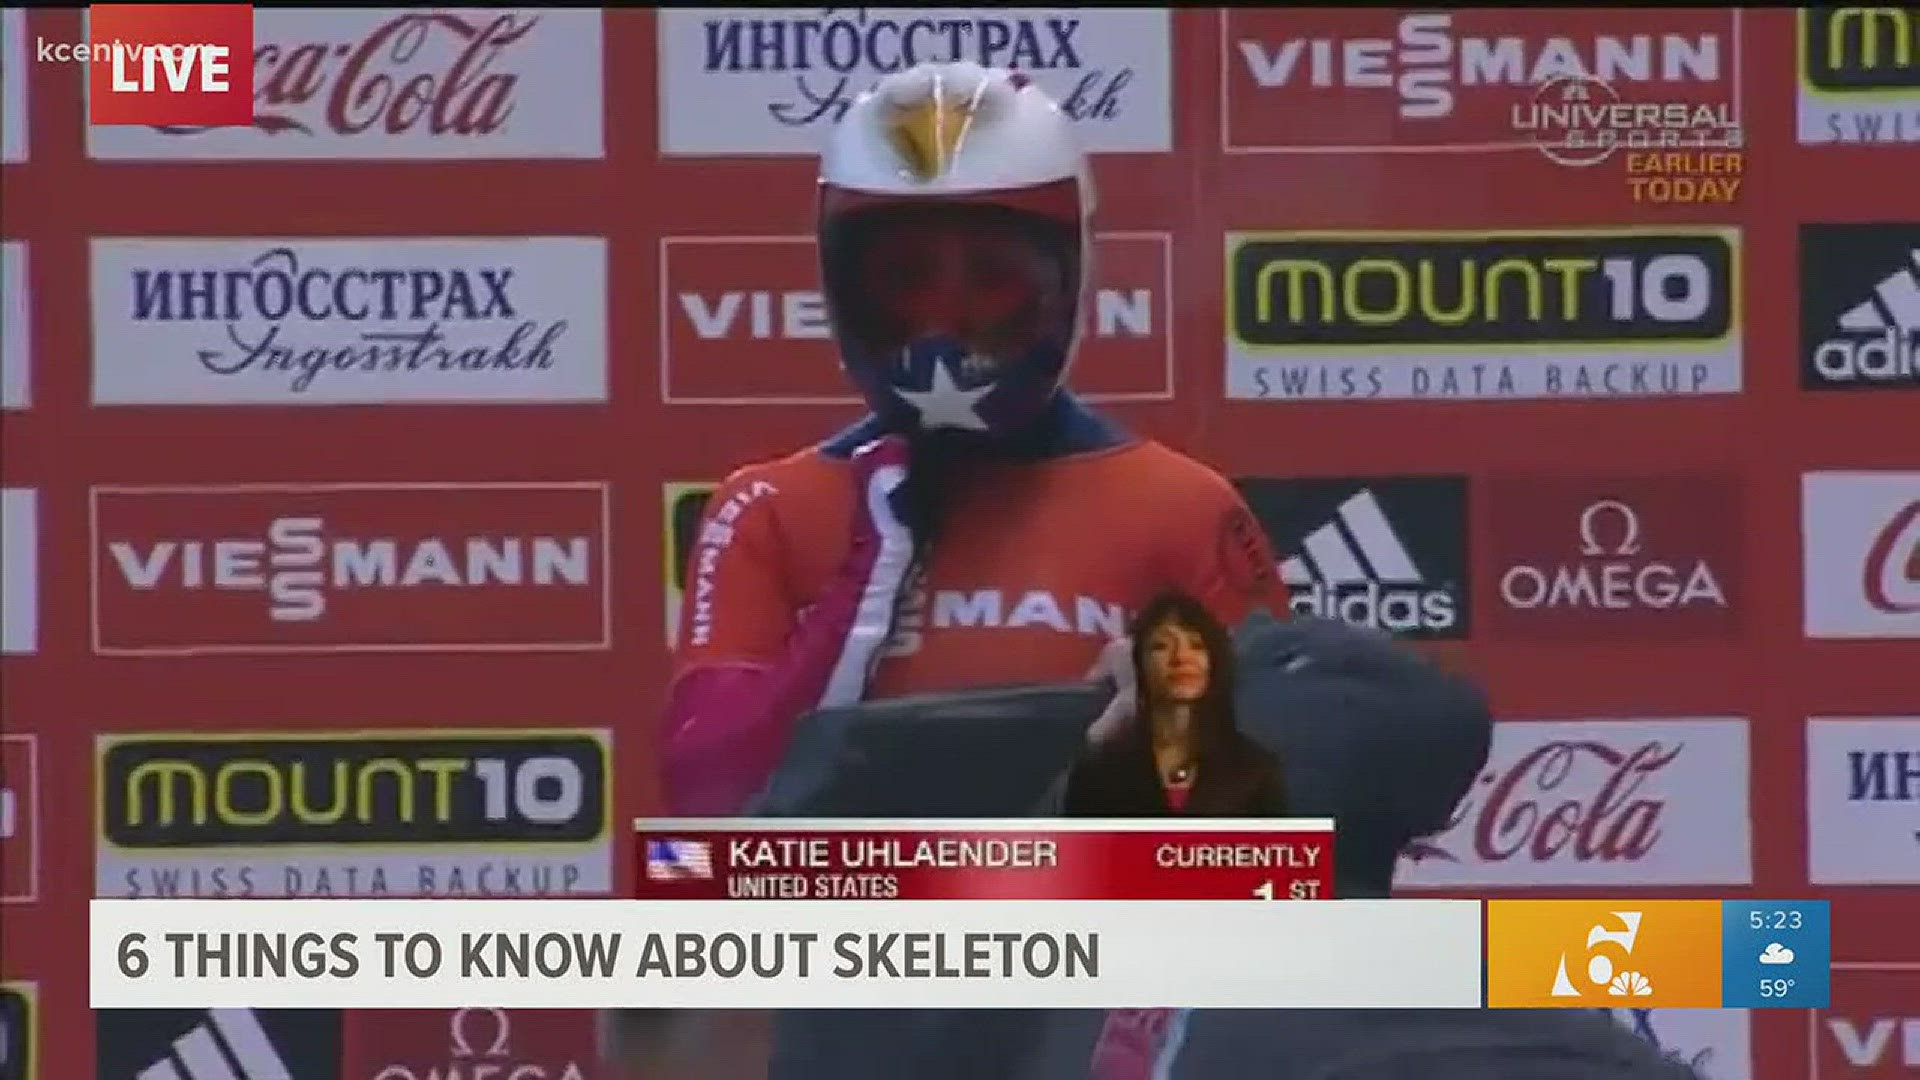 Leslie Draffin explains Skeleton in light of McGregor's own Katie Uhlaender competing in the 2018 Olympics